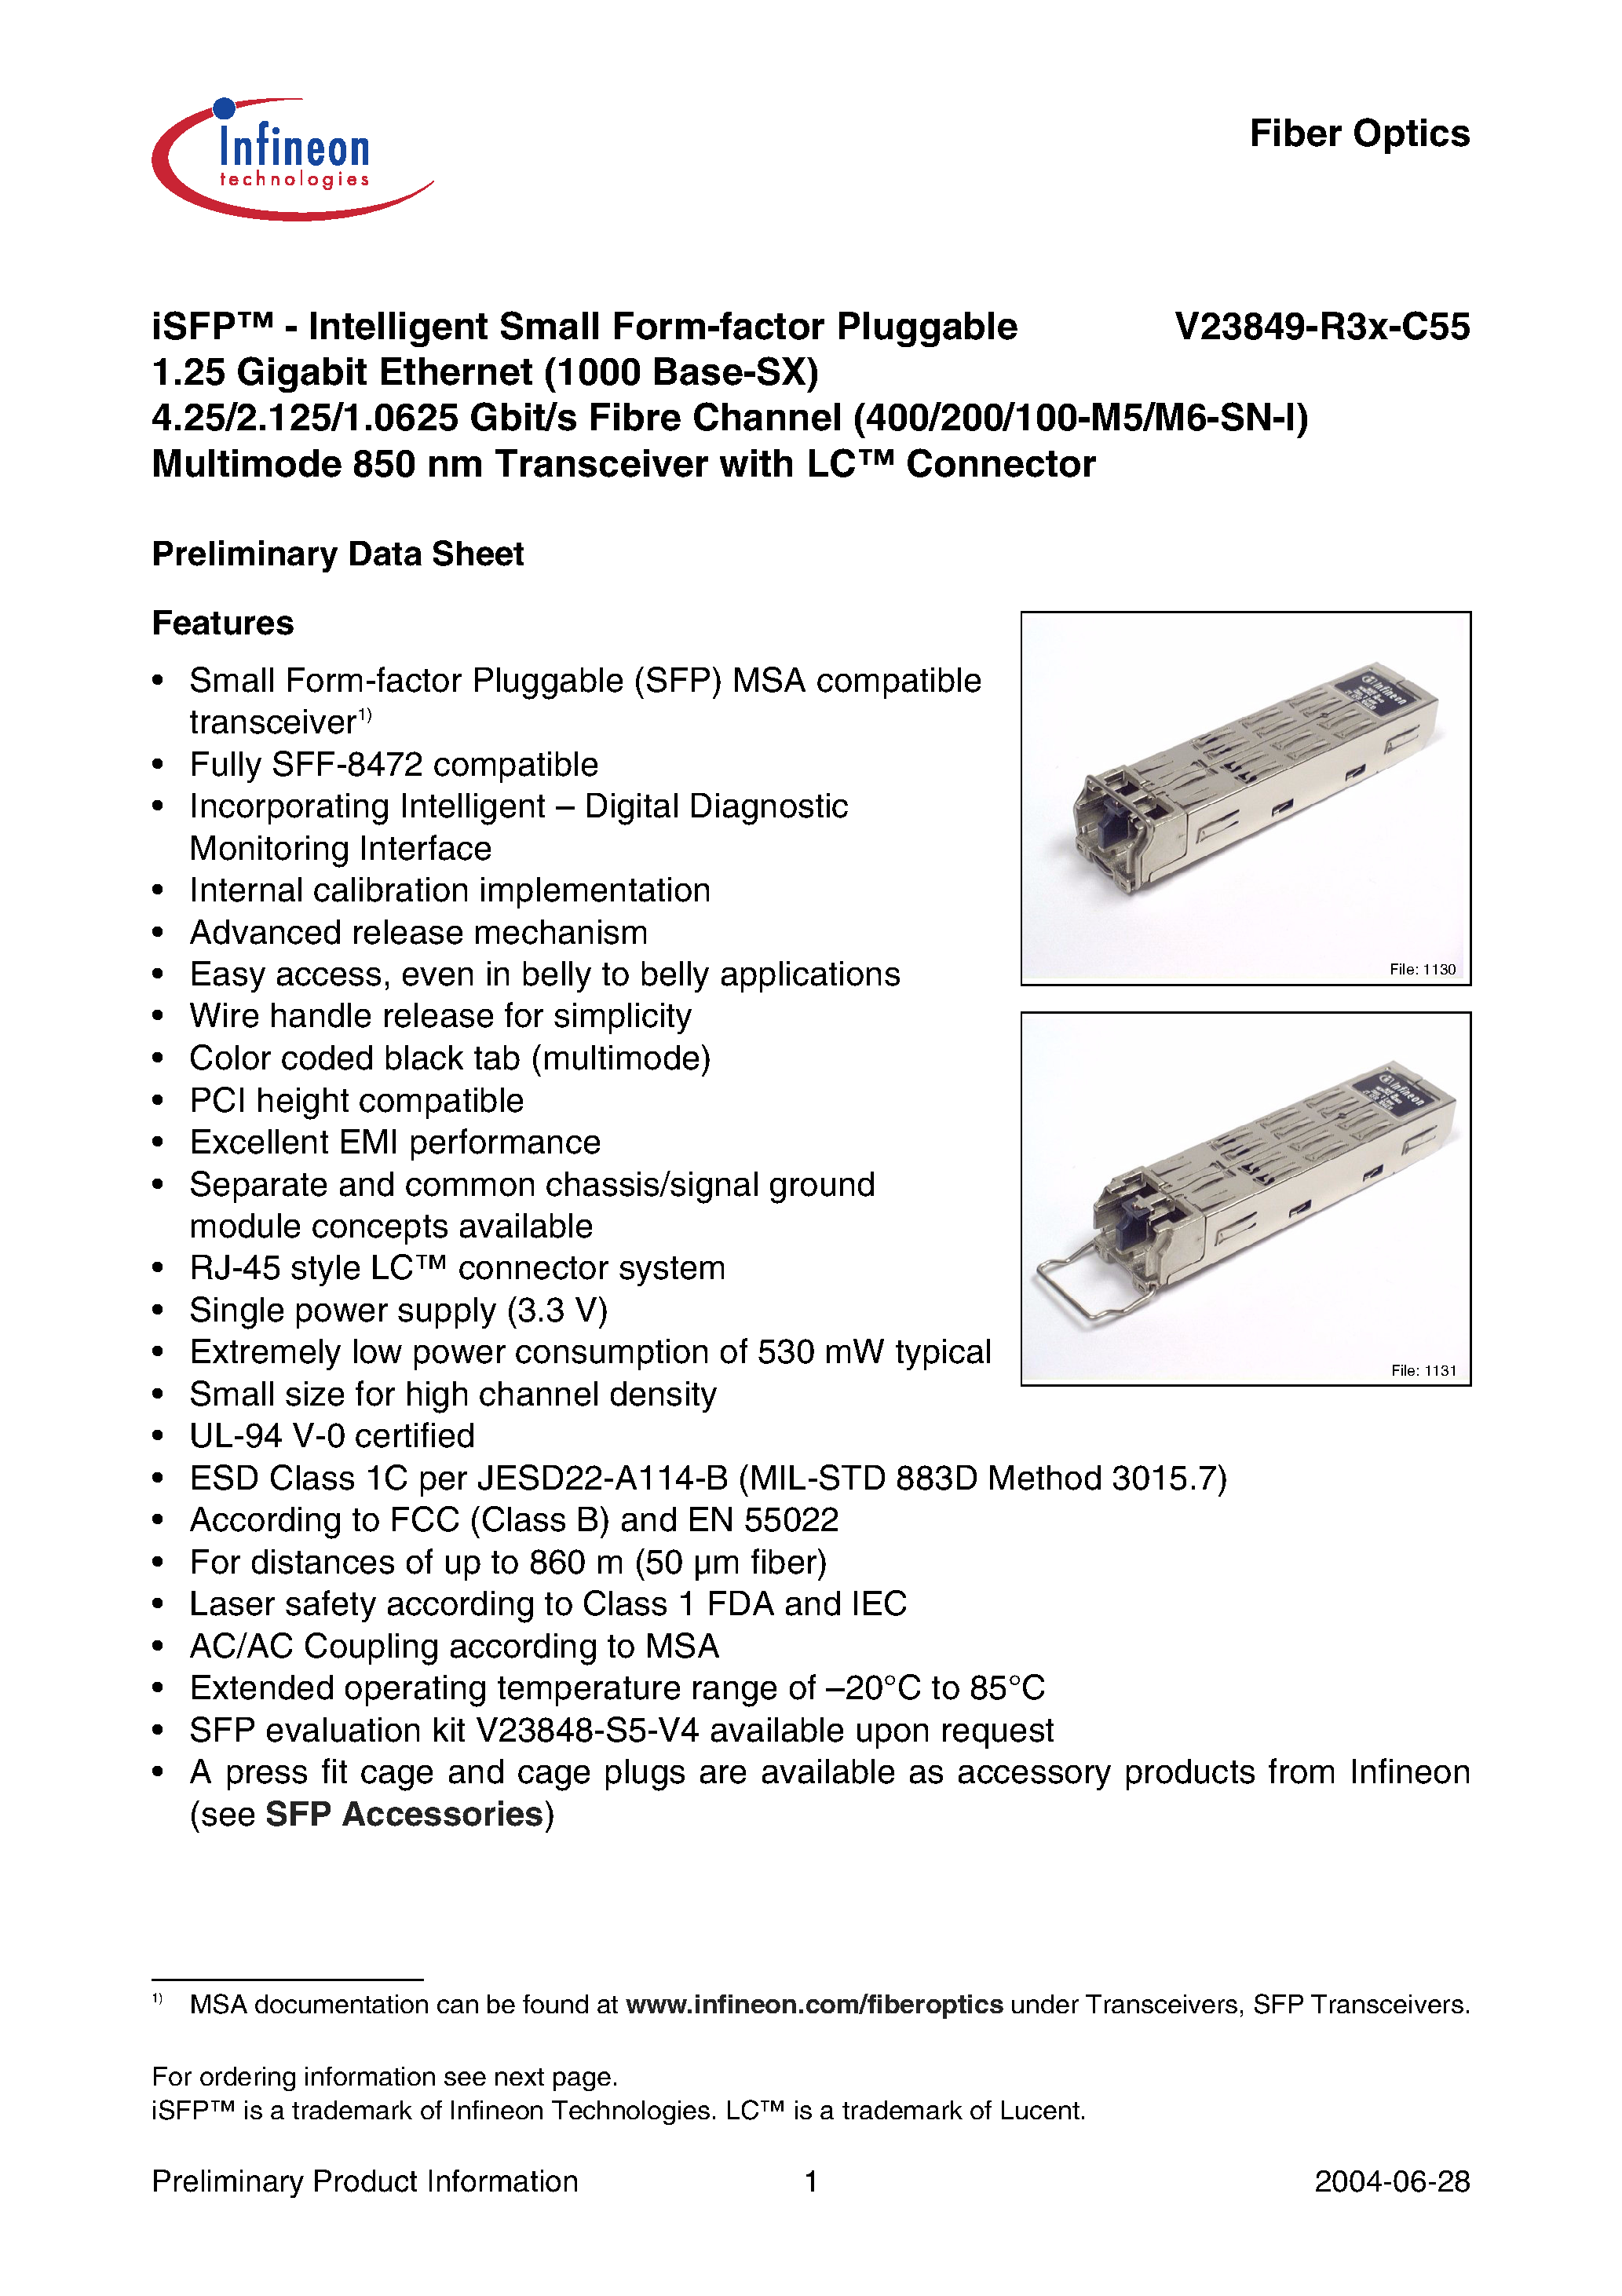 Datasheet V23849-R35-C55 - iSFP-Intelligent Small Form-factor Pluggable 1.25 Gigabit Ethernet 4.25/2.125/1.0625 Gbit/s Fibre Channel page 1